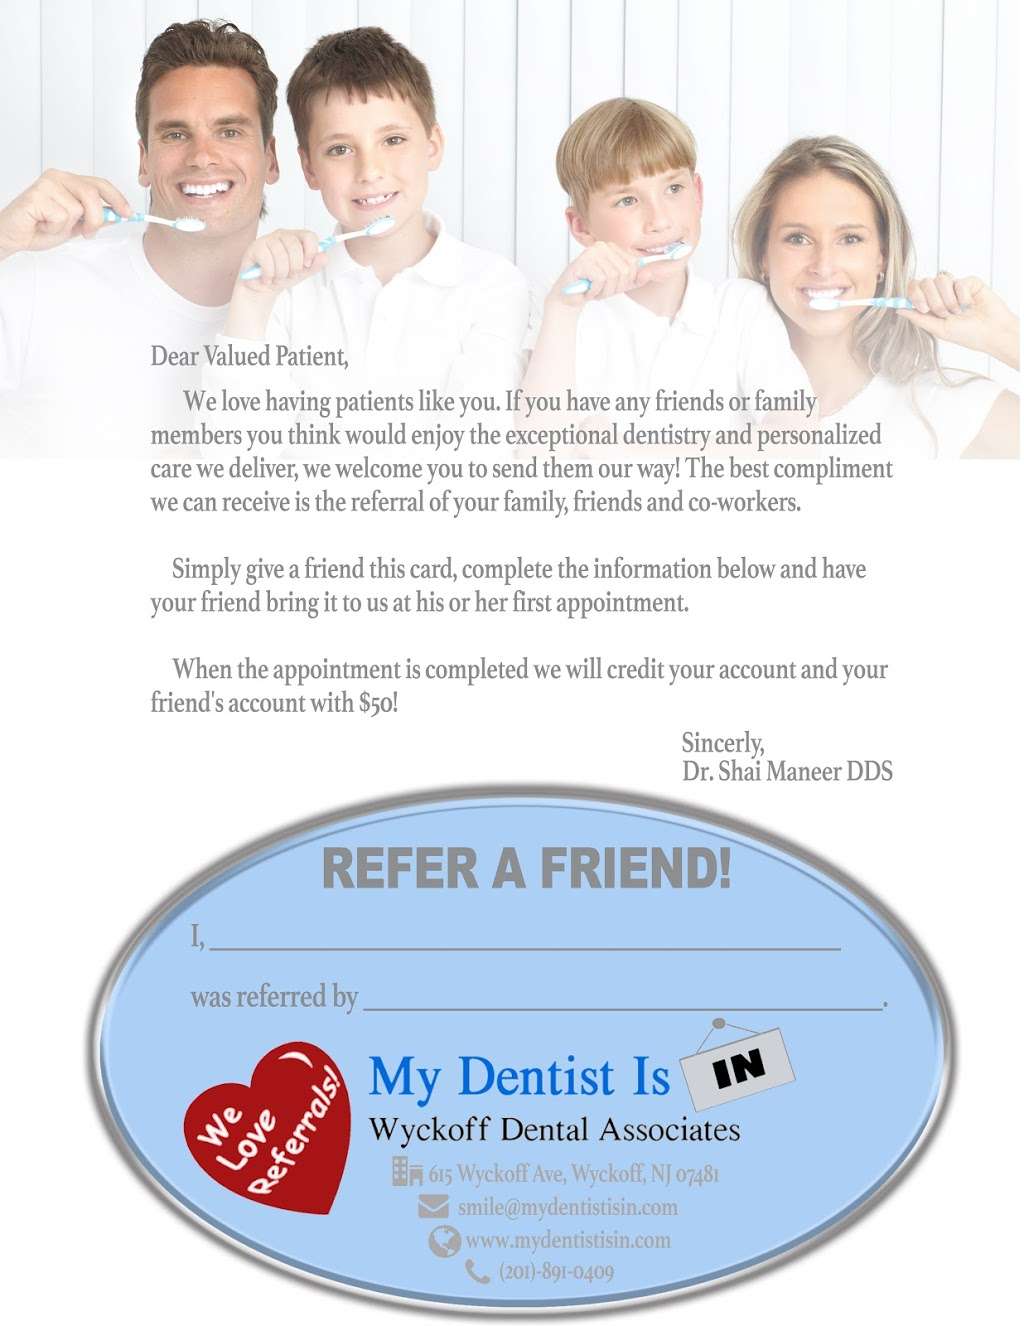 MY DENTIST IS IN - Wyckoff Dental Associates | 615 Wyckoff Ave, Dental Suite, Wyckoff, NJ 07481 | Phone: (201) 891-0409